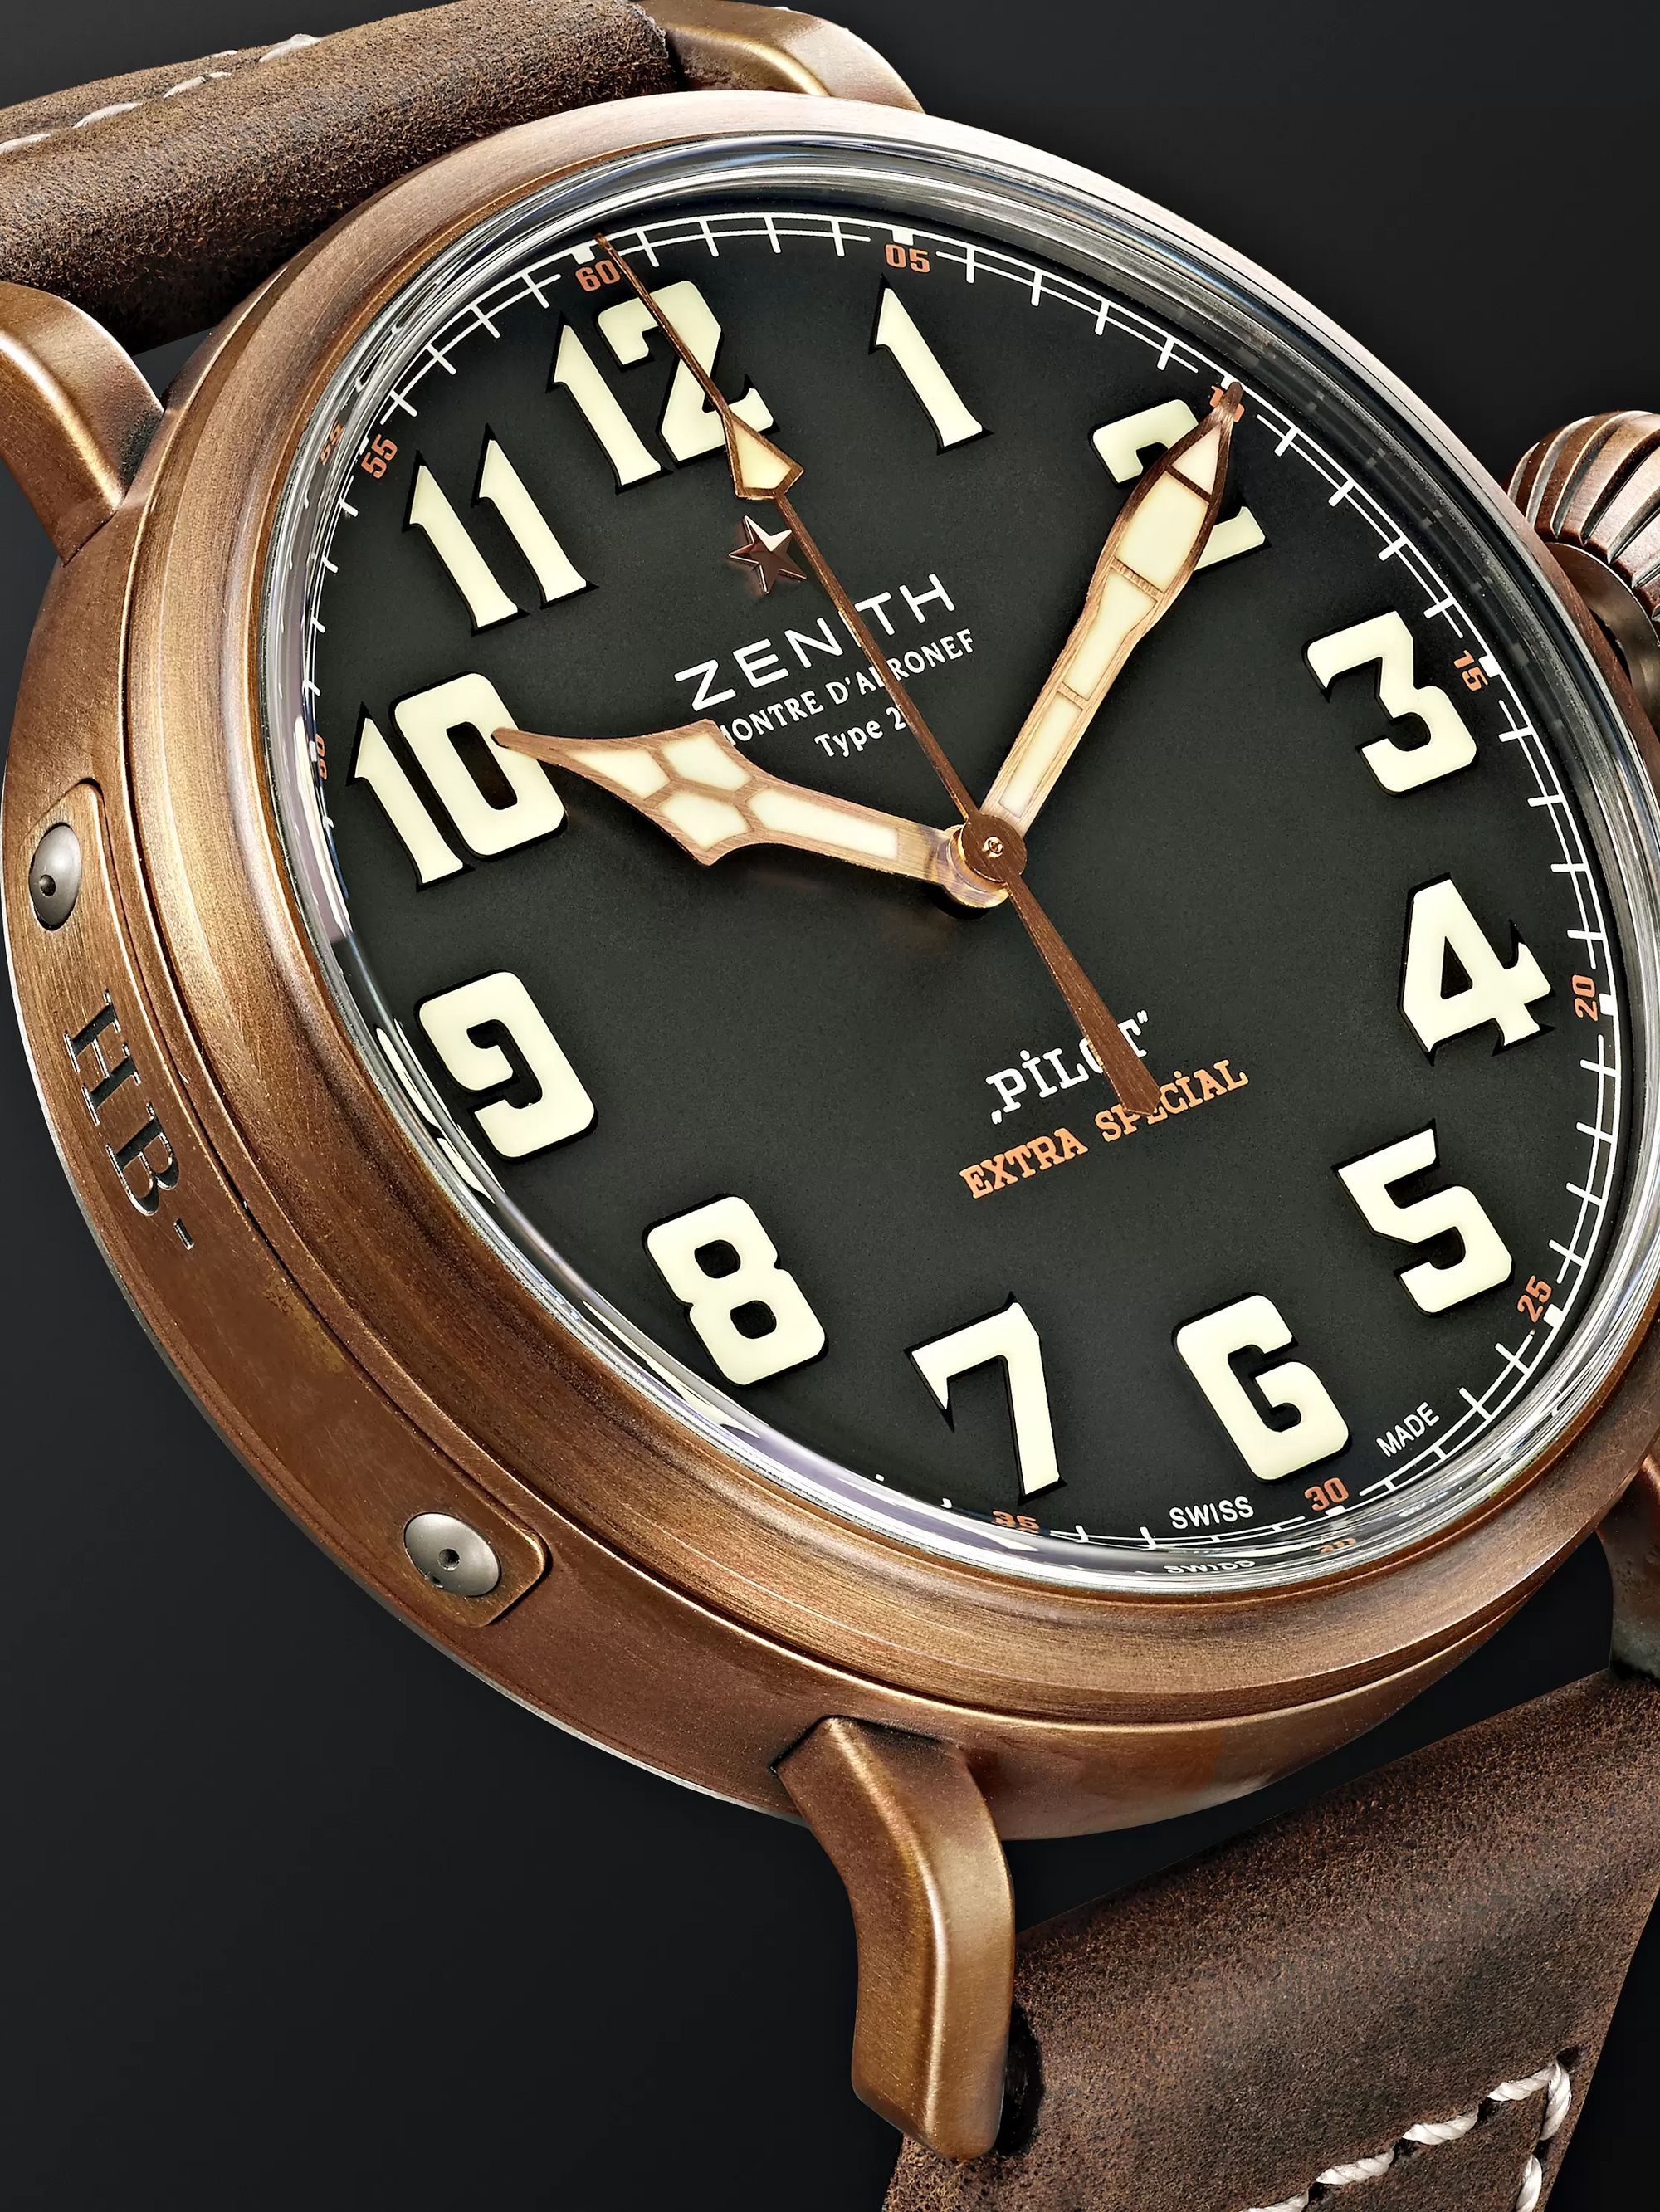 ZENITH Pilot Type 20 Extra Special 45mm Bronze and Nubuck Watch, Ref. No. 29.2430.679/21.C753